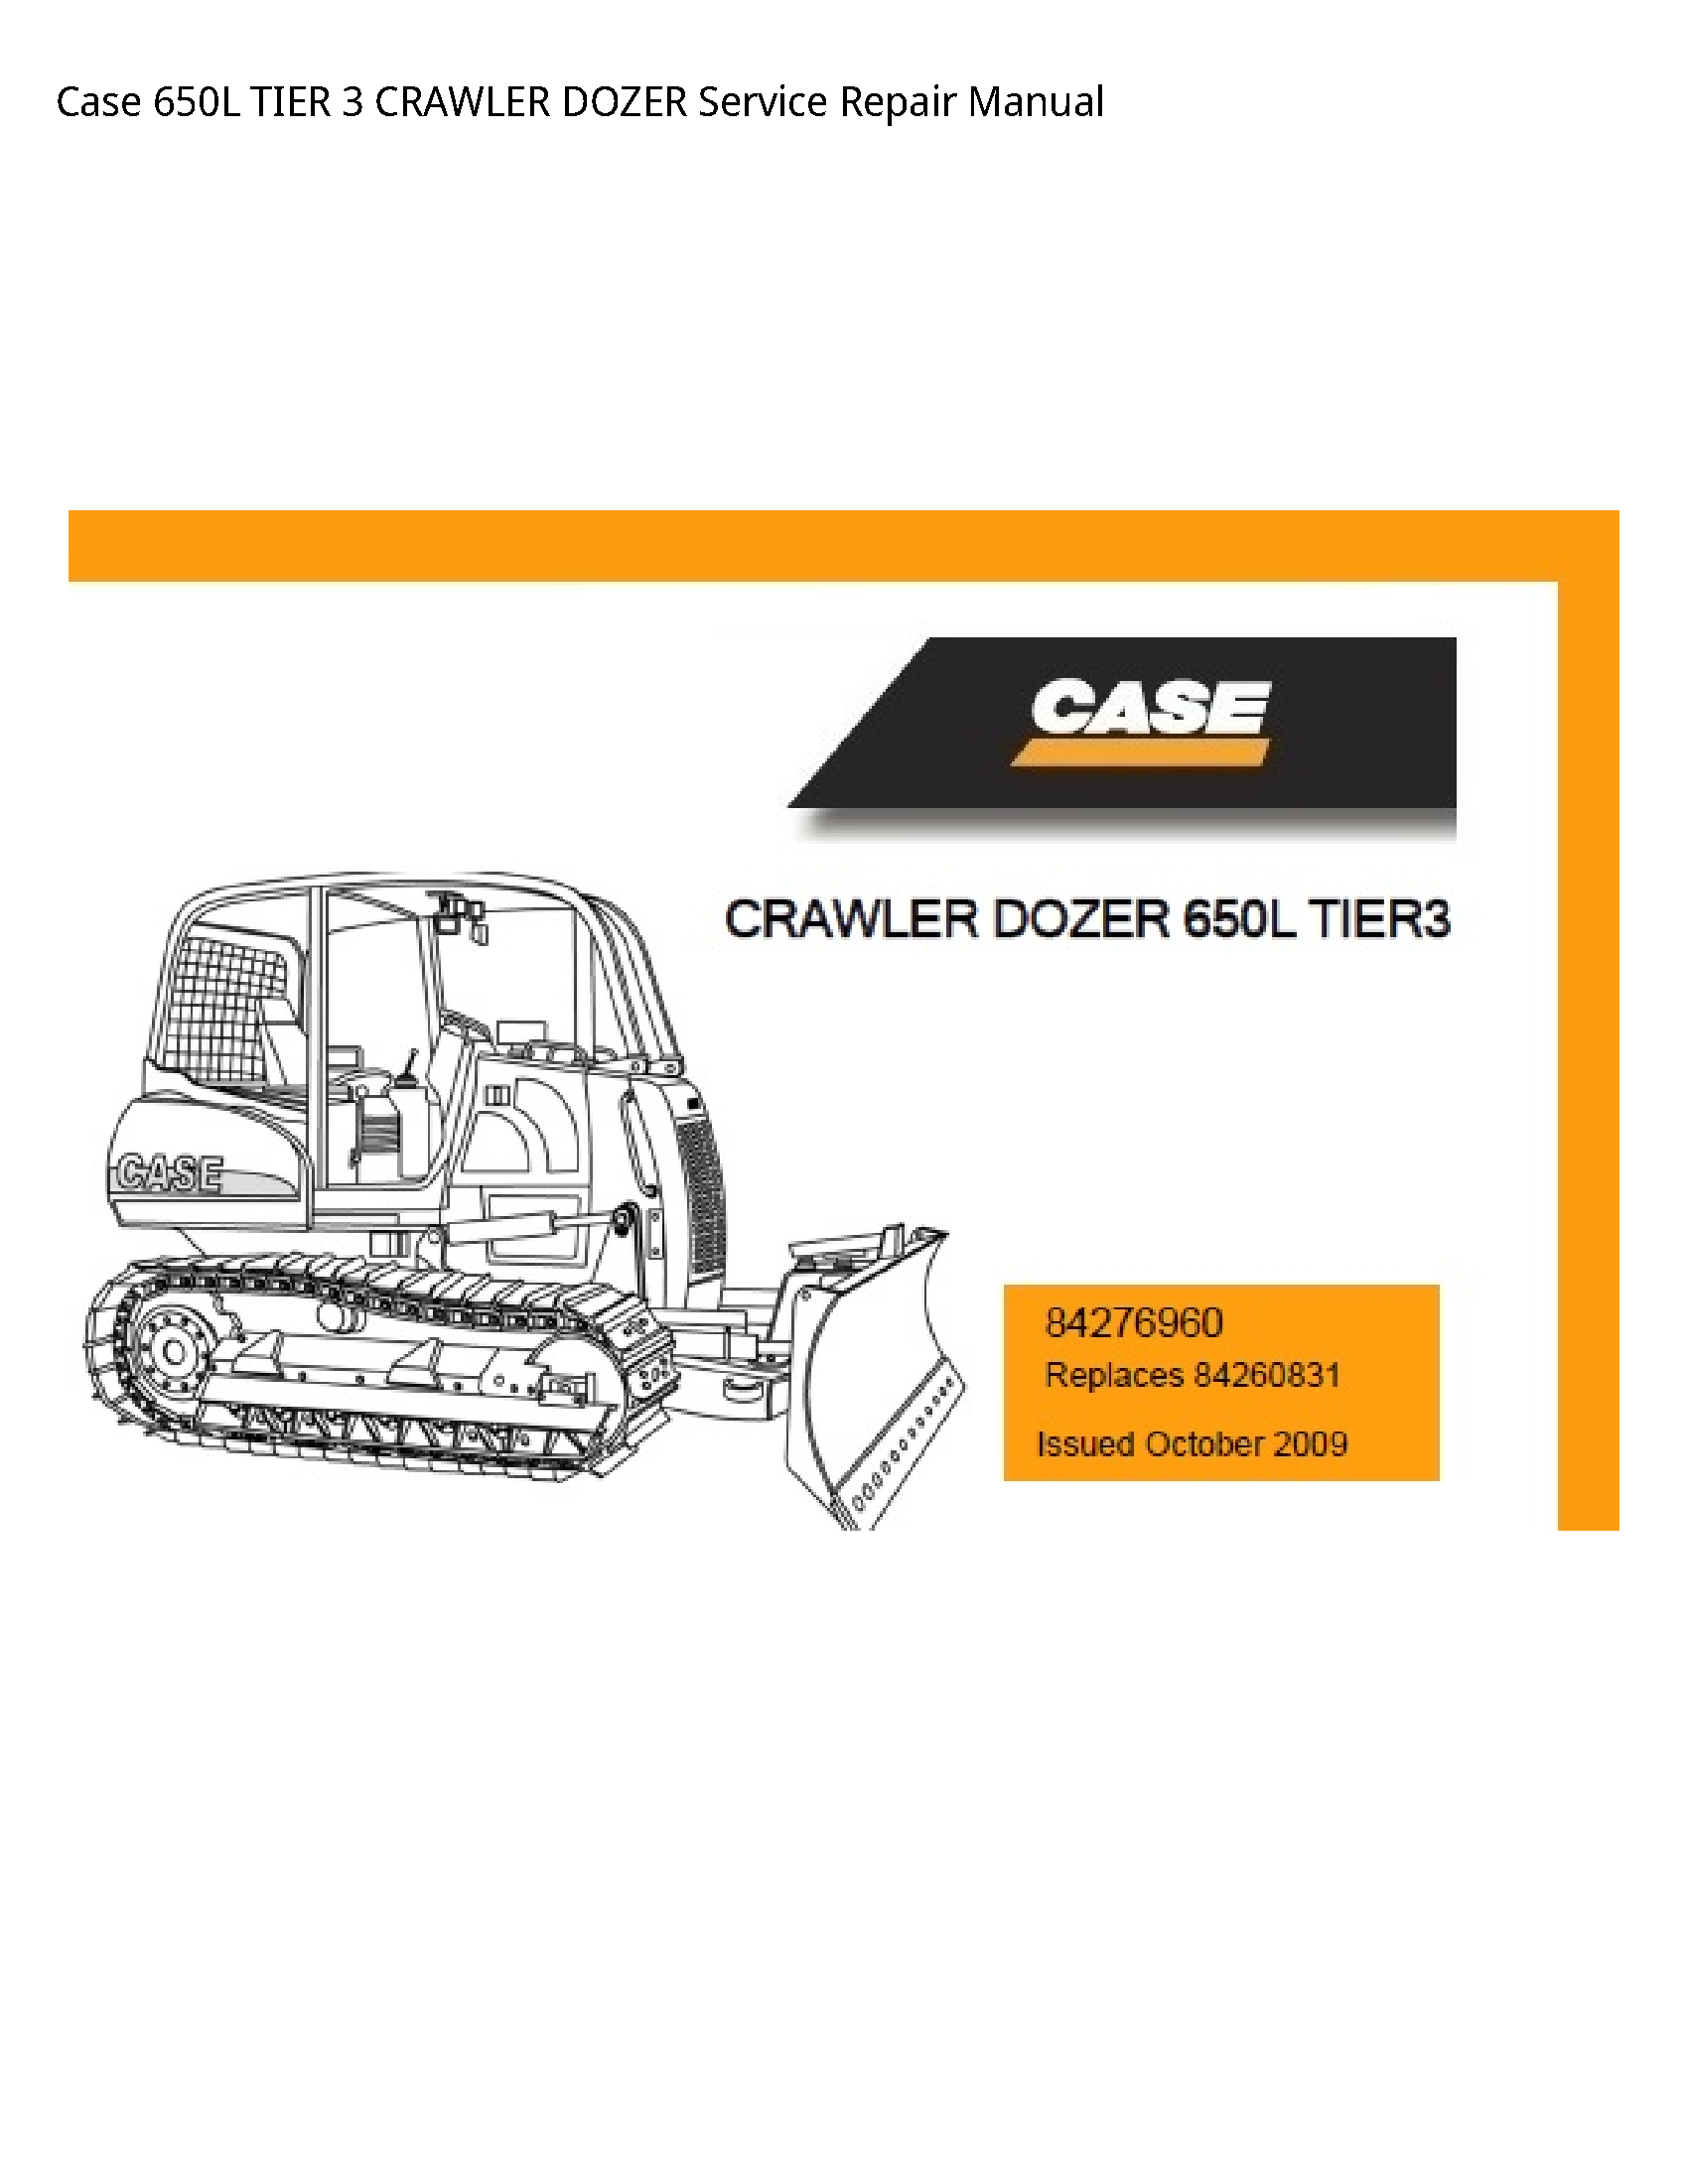 Case/Case IH 650L TIER CRAWLER DOZER manual